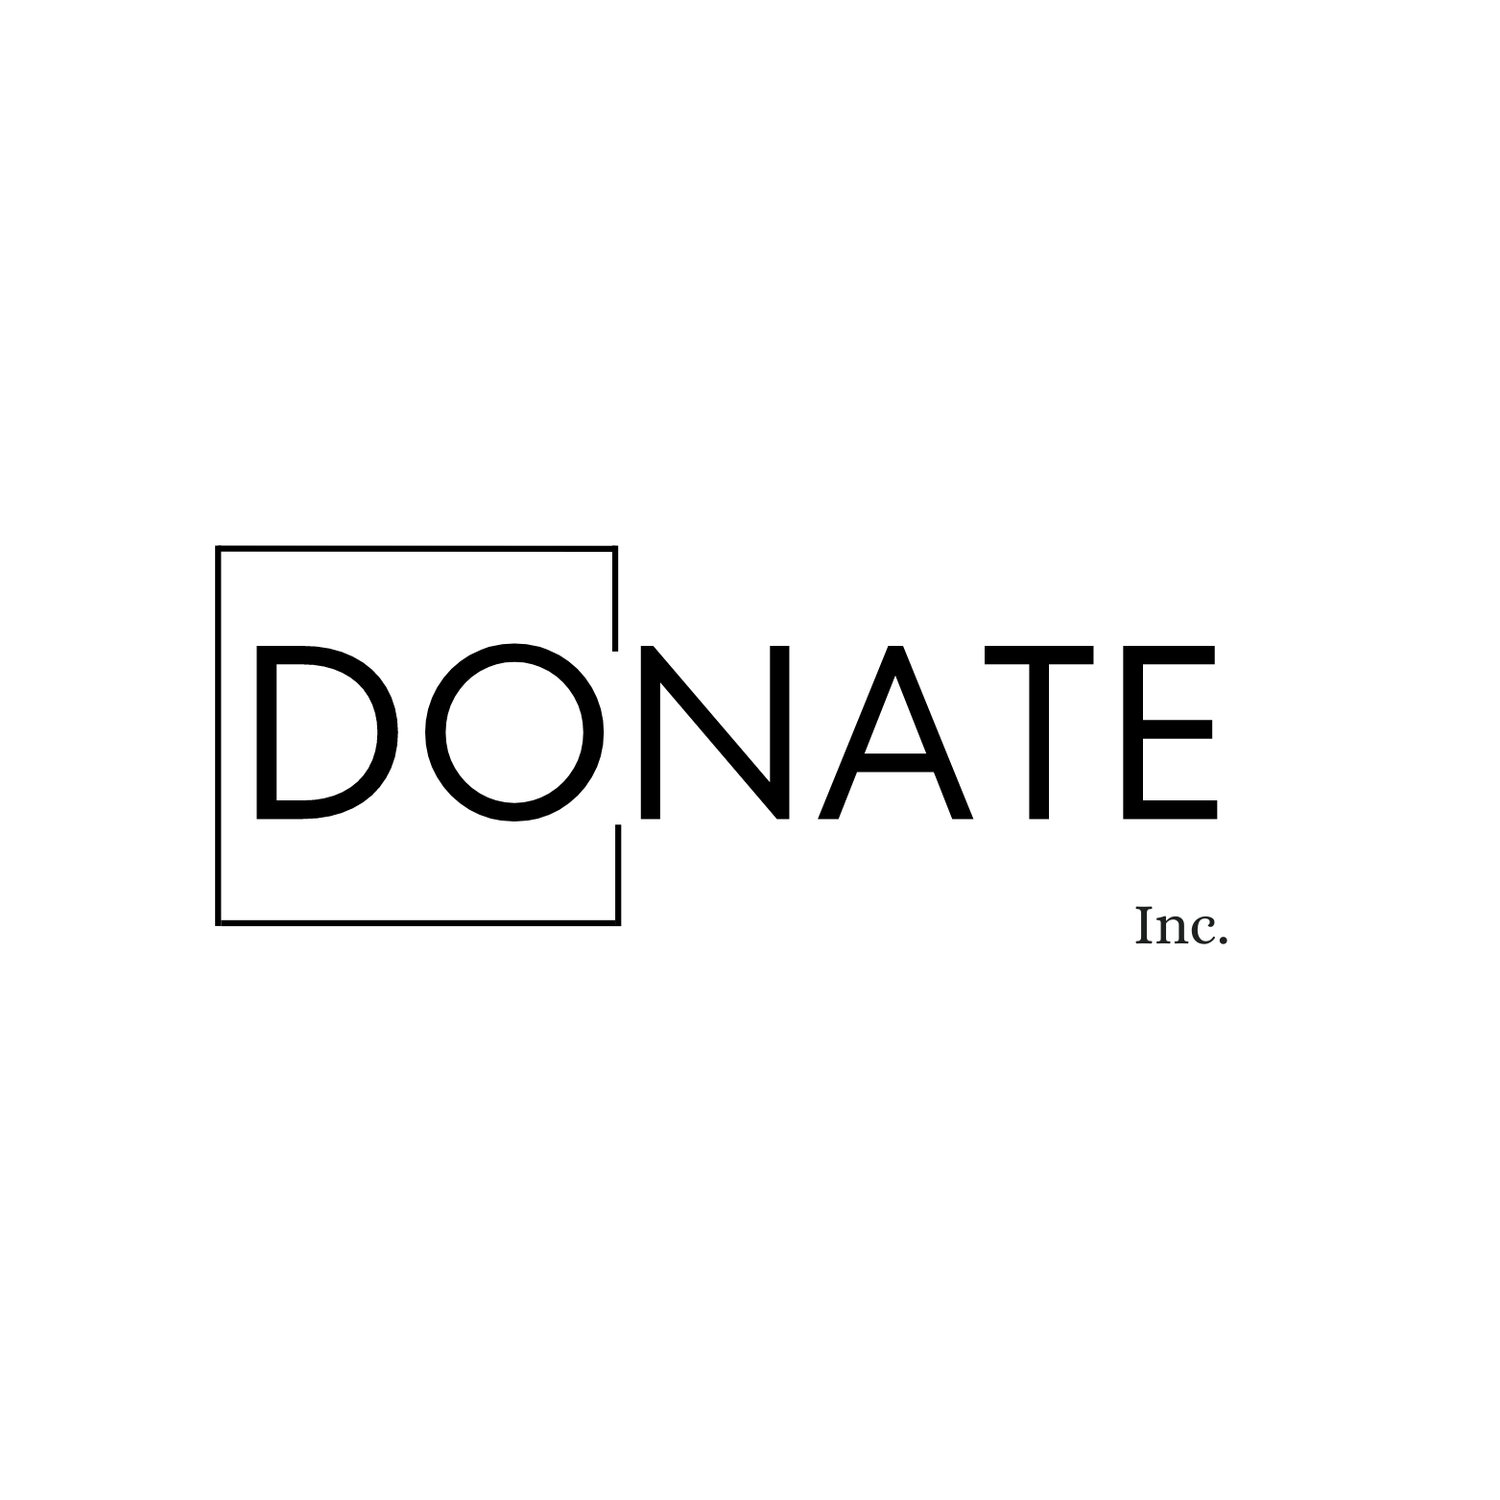 DONATE Inc.